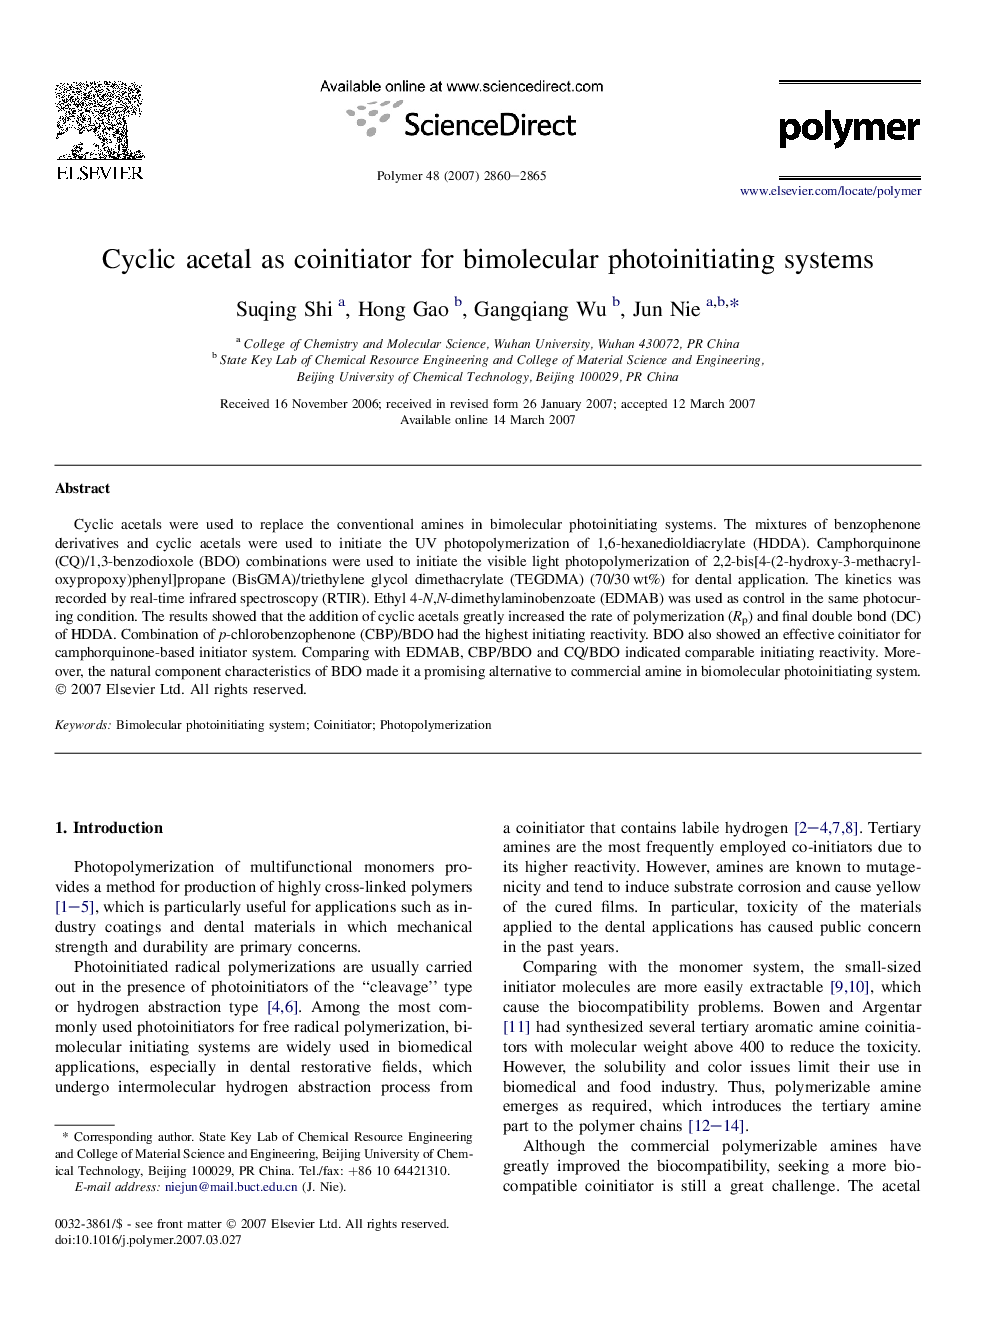 Cyclic acetal as coinitiator for bimolecular photoinitiating systems